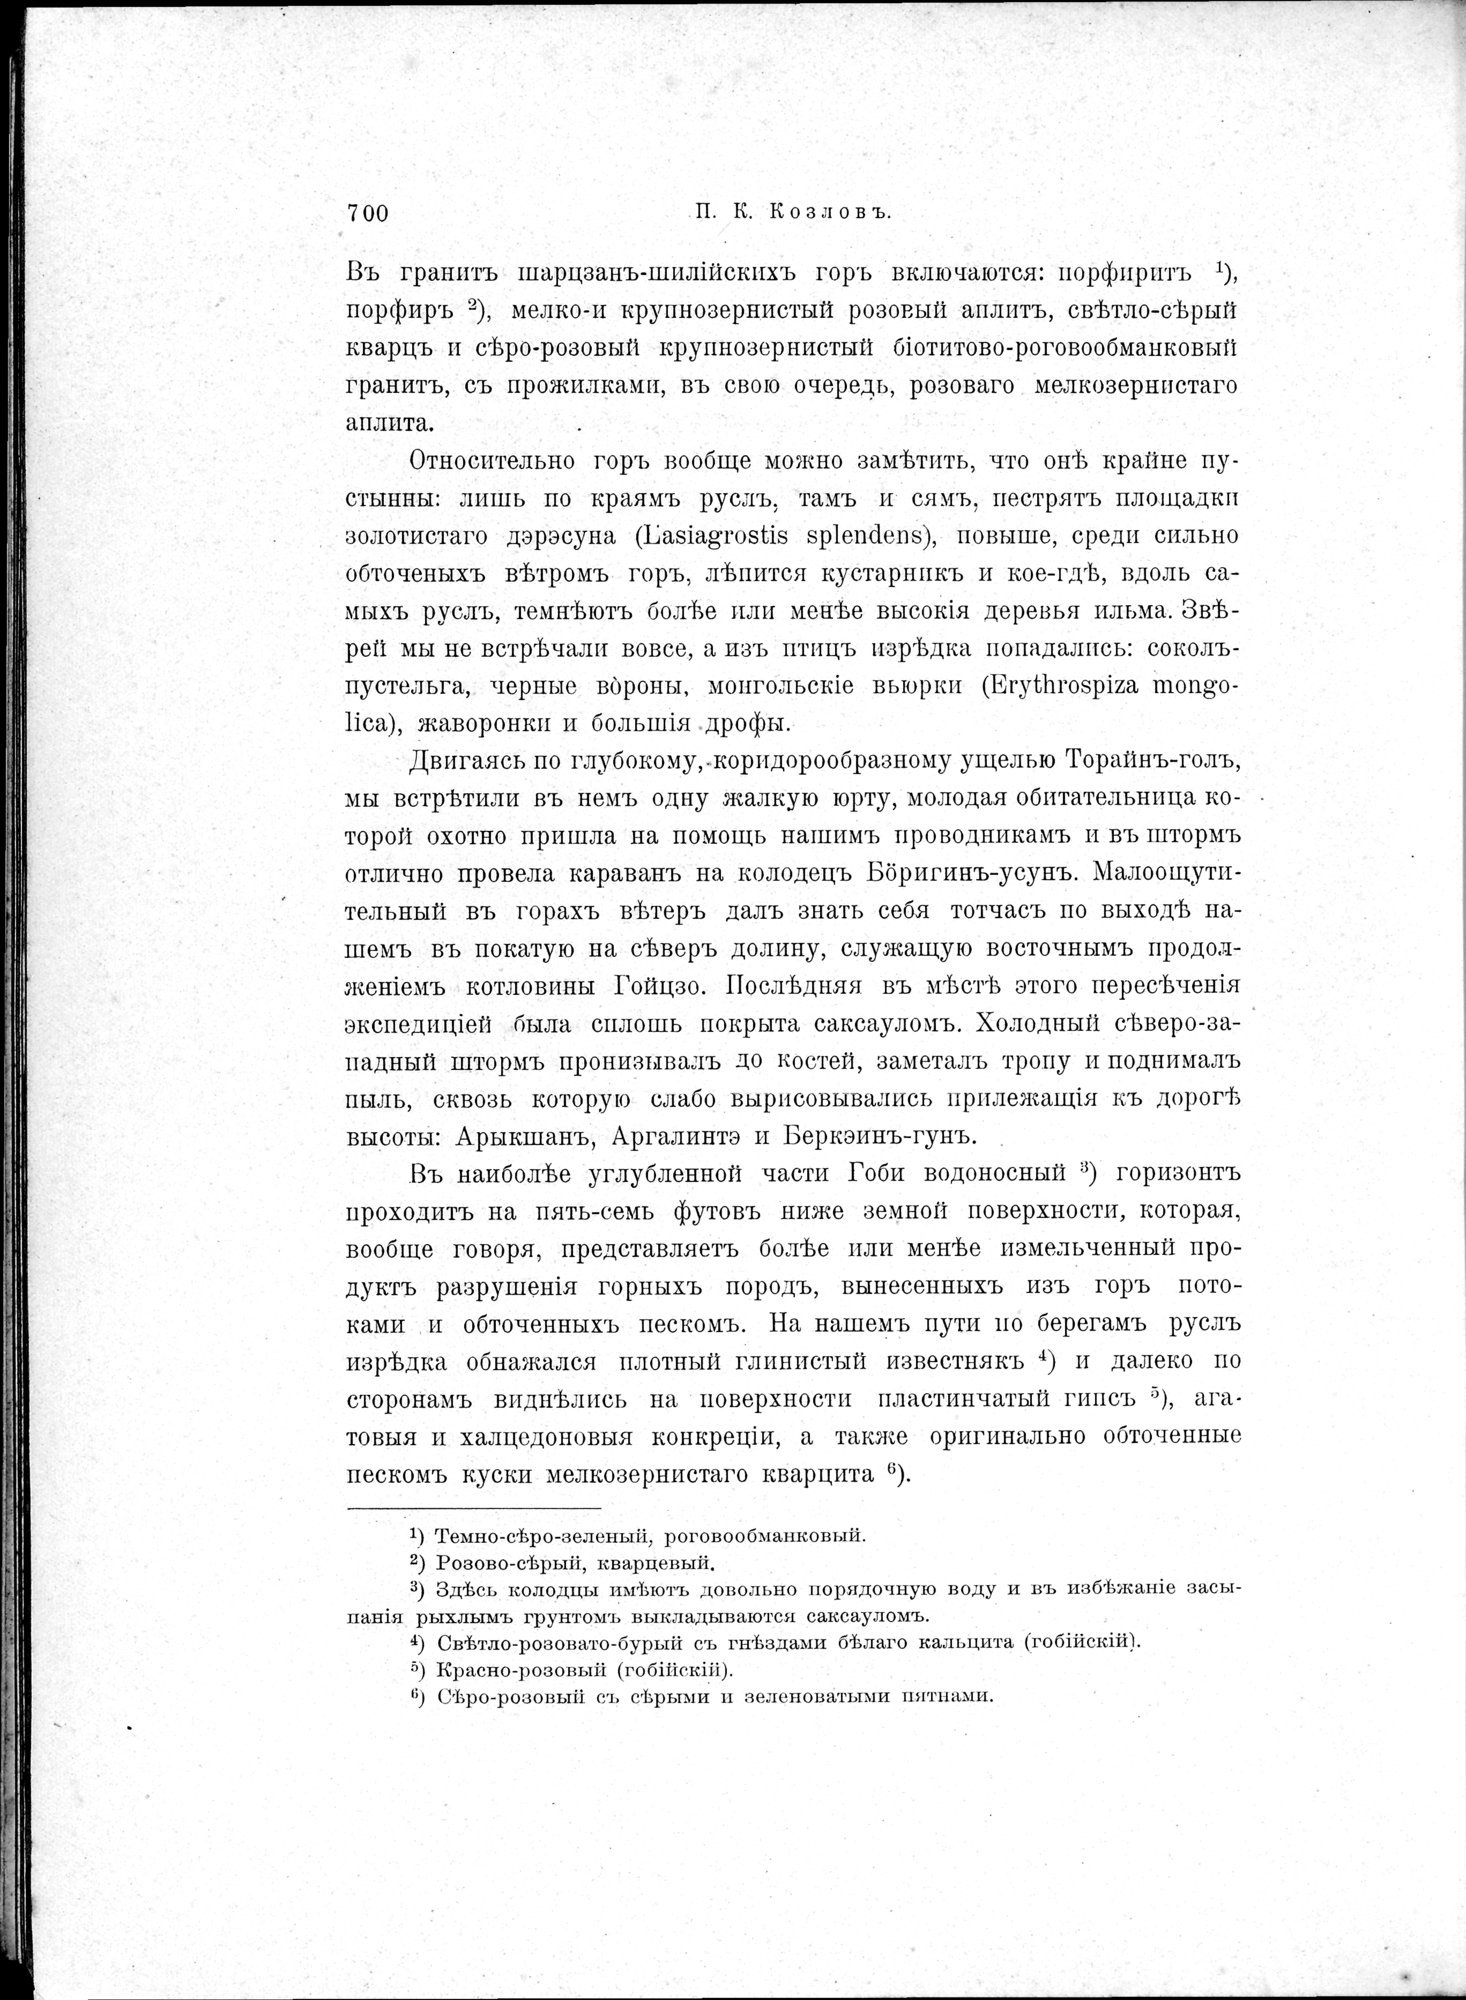 Mongoliia i Kam : vol.2 / Page 538 (Grayscale High Resolution Image)